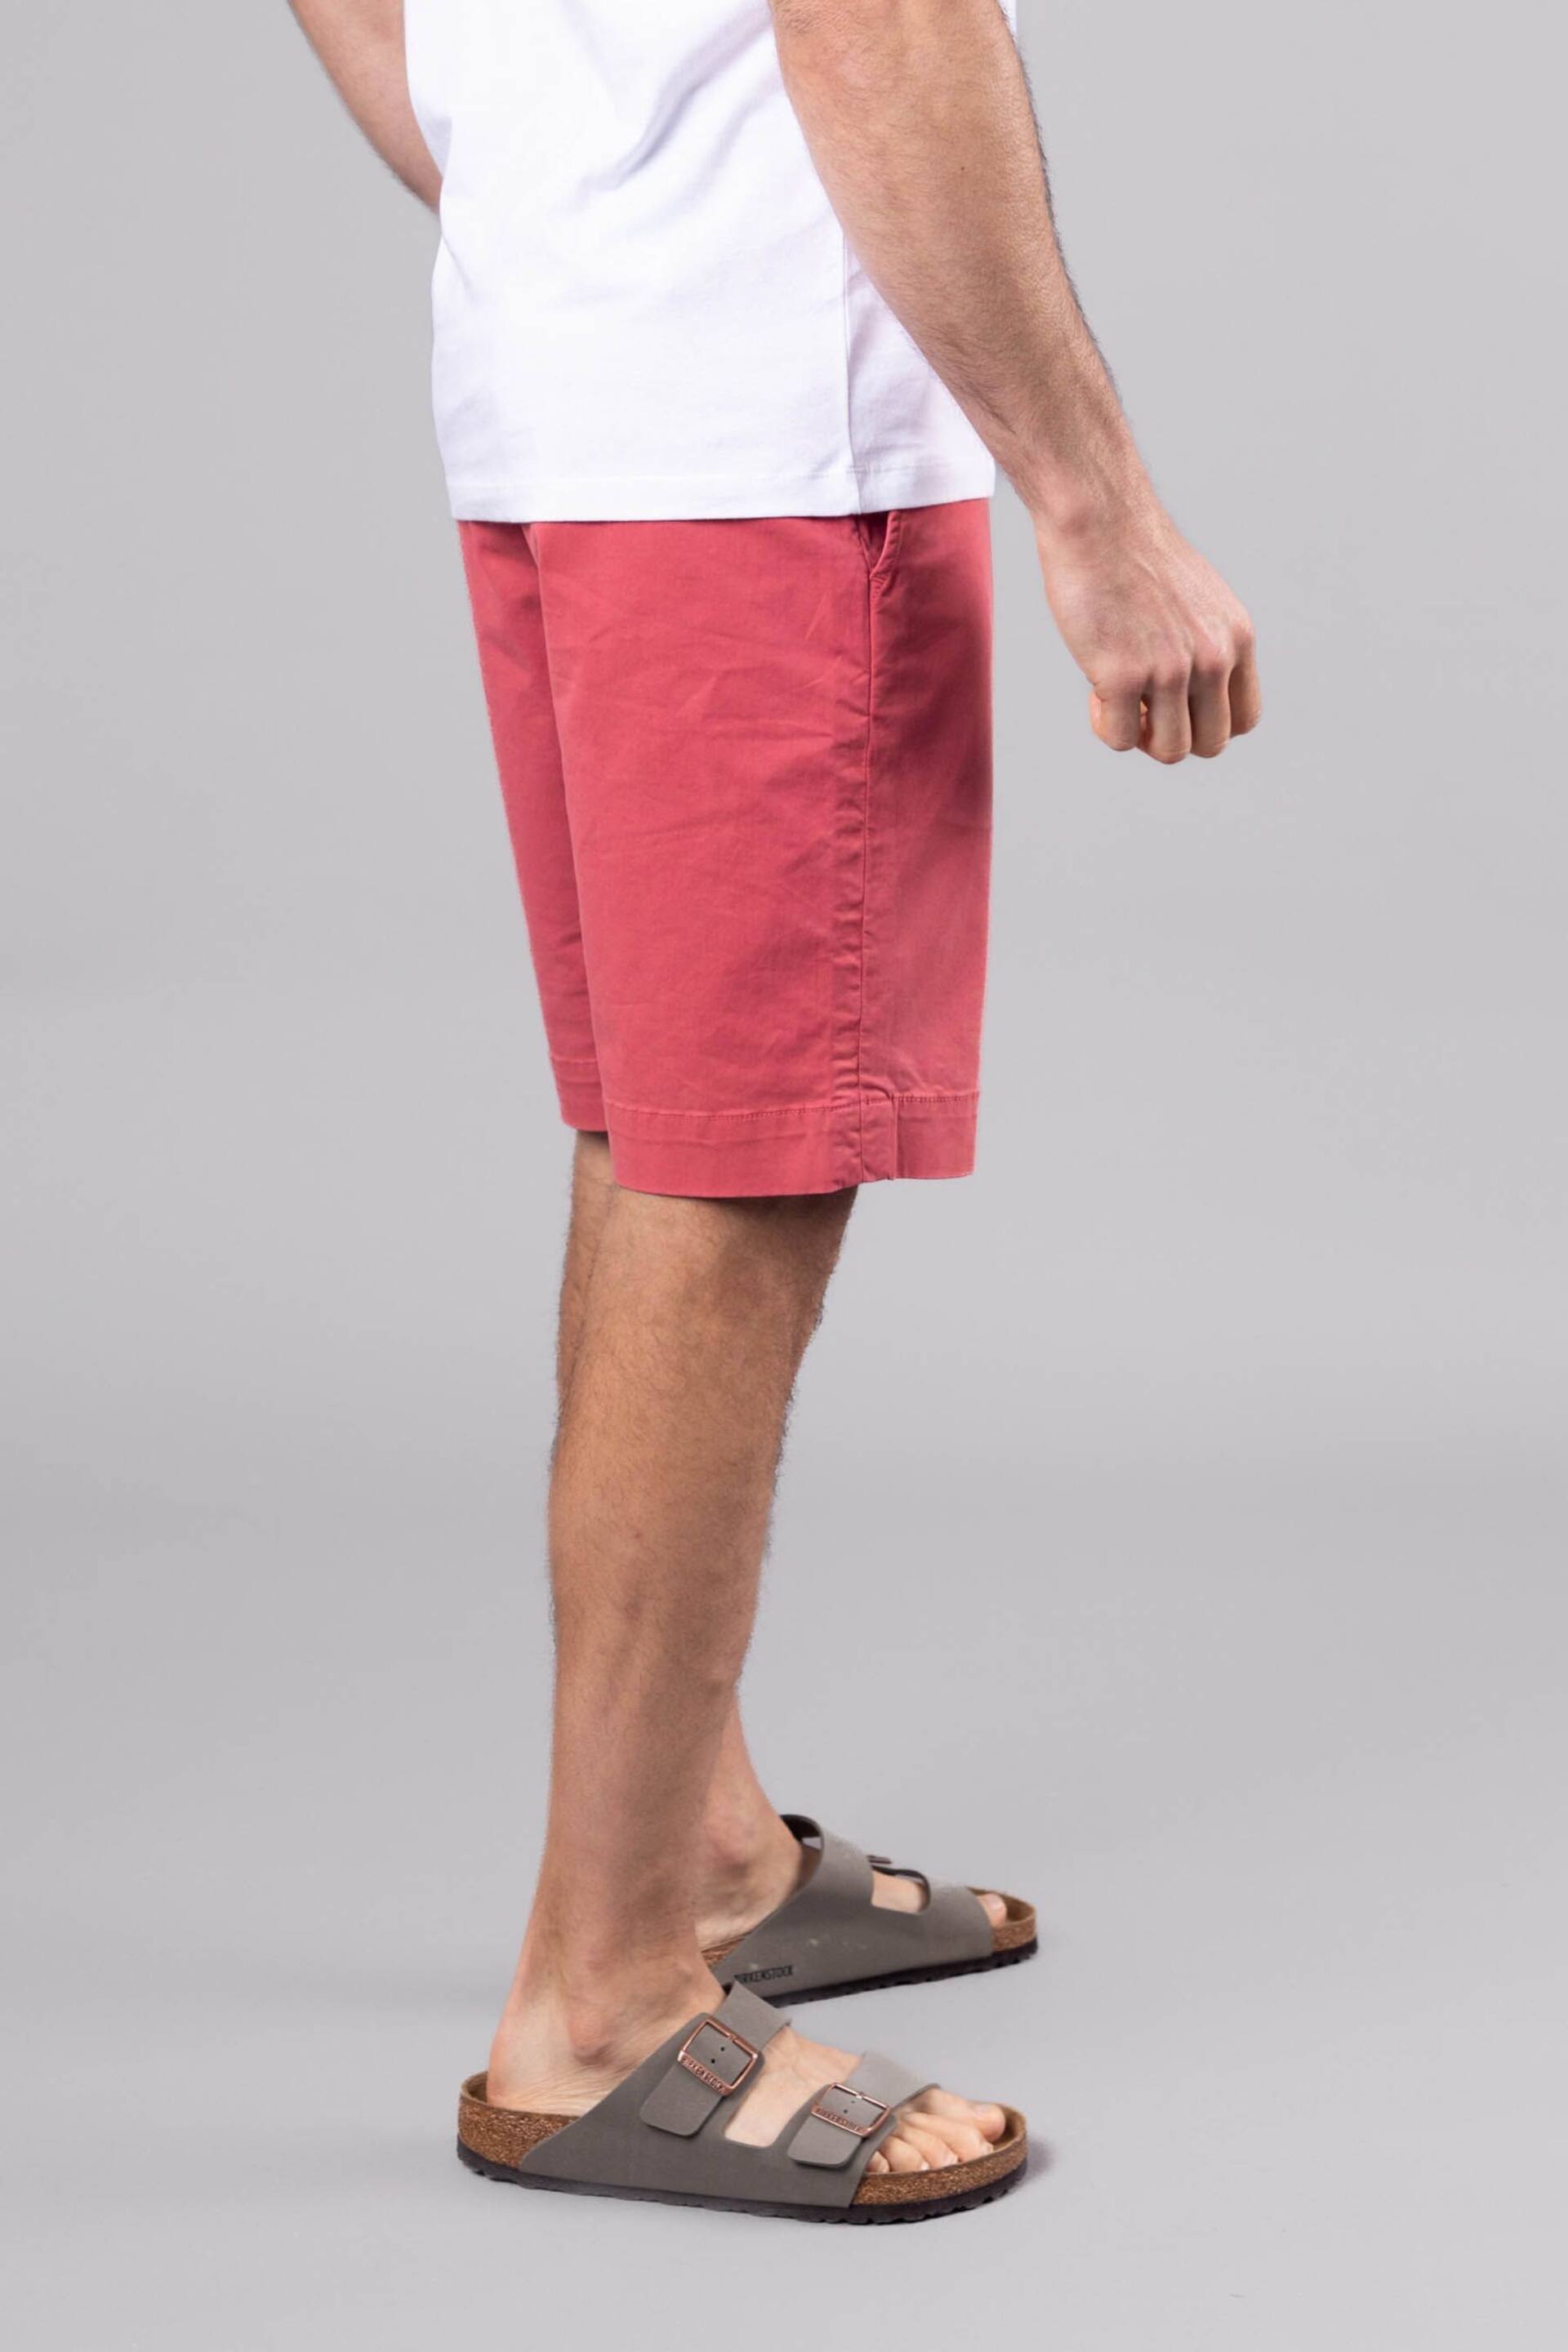 Lakeland Clothing Pink Fynn Cotton Shorts - Image 3 of 3